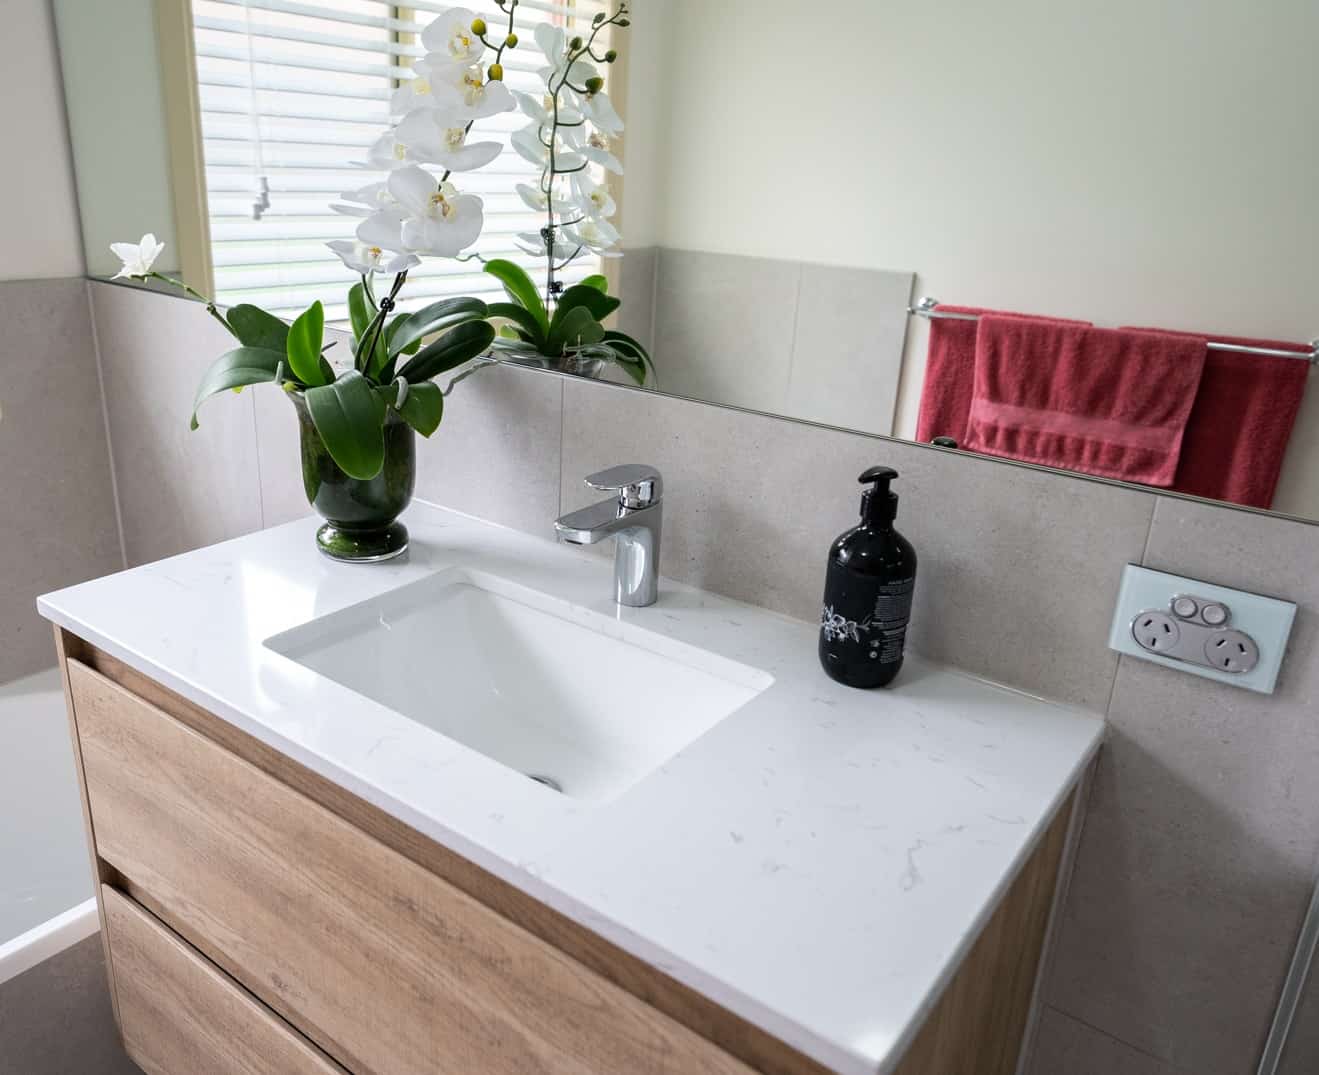 Bathroom Renovations, bathroom tiling or Bathroom Waterproofing Bathrooms – we have the solution for you!